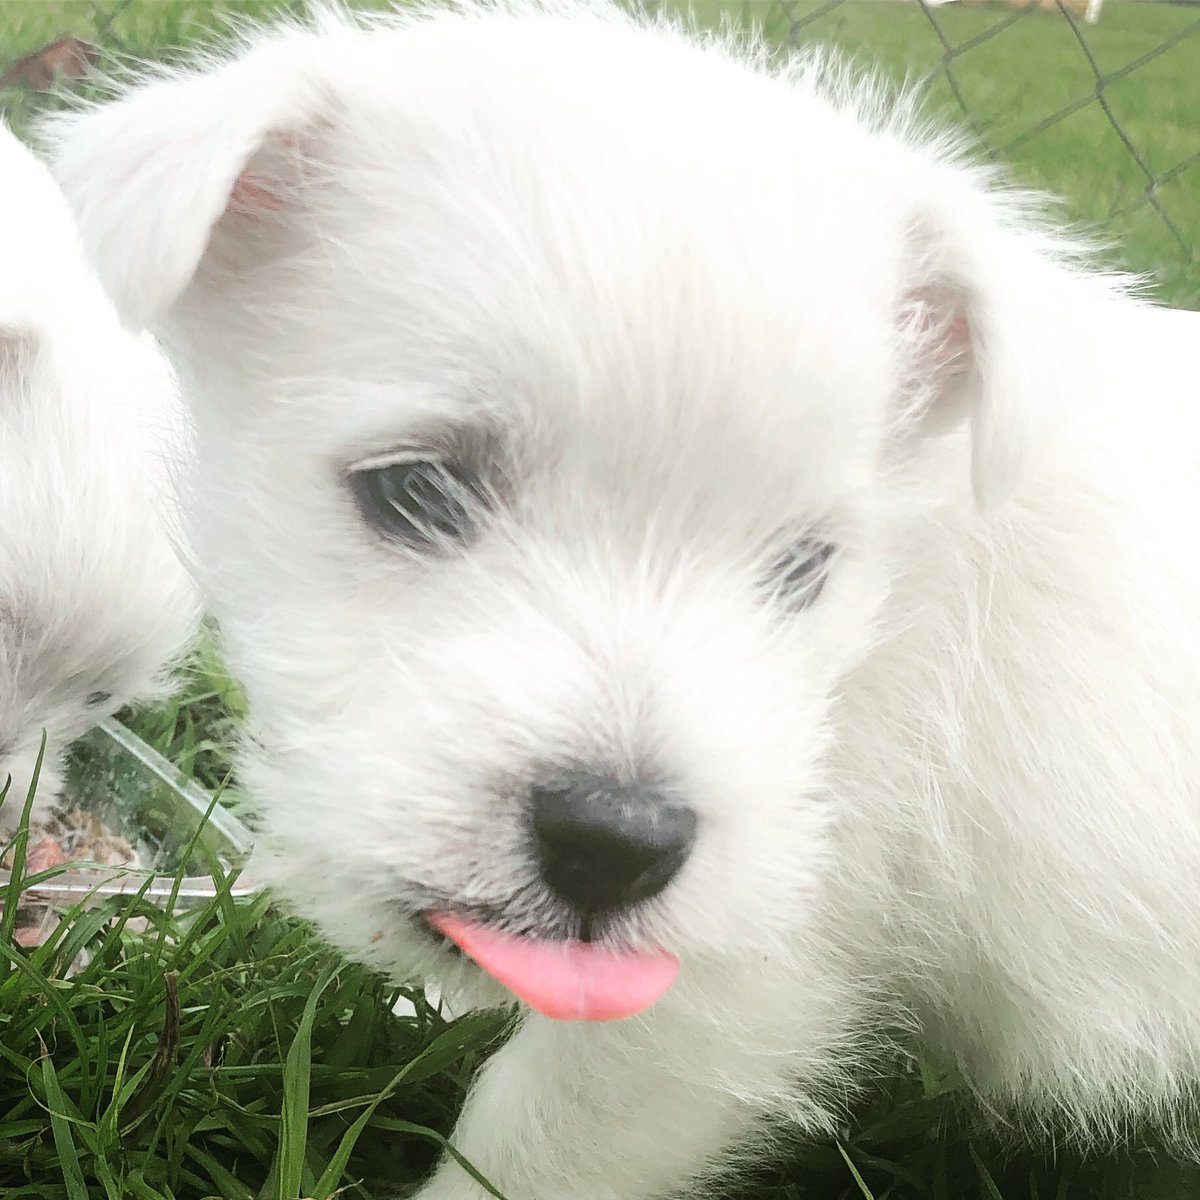 Tiny Tongue out Tuesday #pupper #doggos #dogsoftwitter #myboy #jock #stickitout #pink #🐾 #westiesarebesties #westie #Puppies #whitedogs #lovedogs #puppylove #puppy #polarbear #tongue